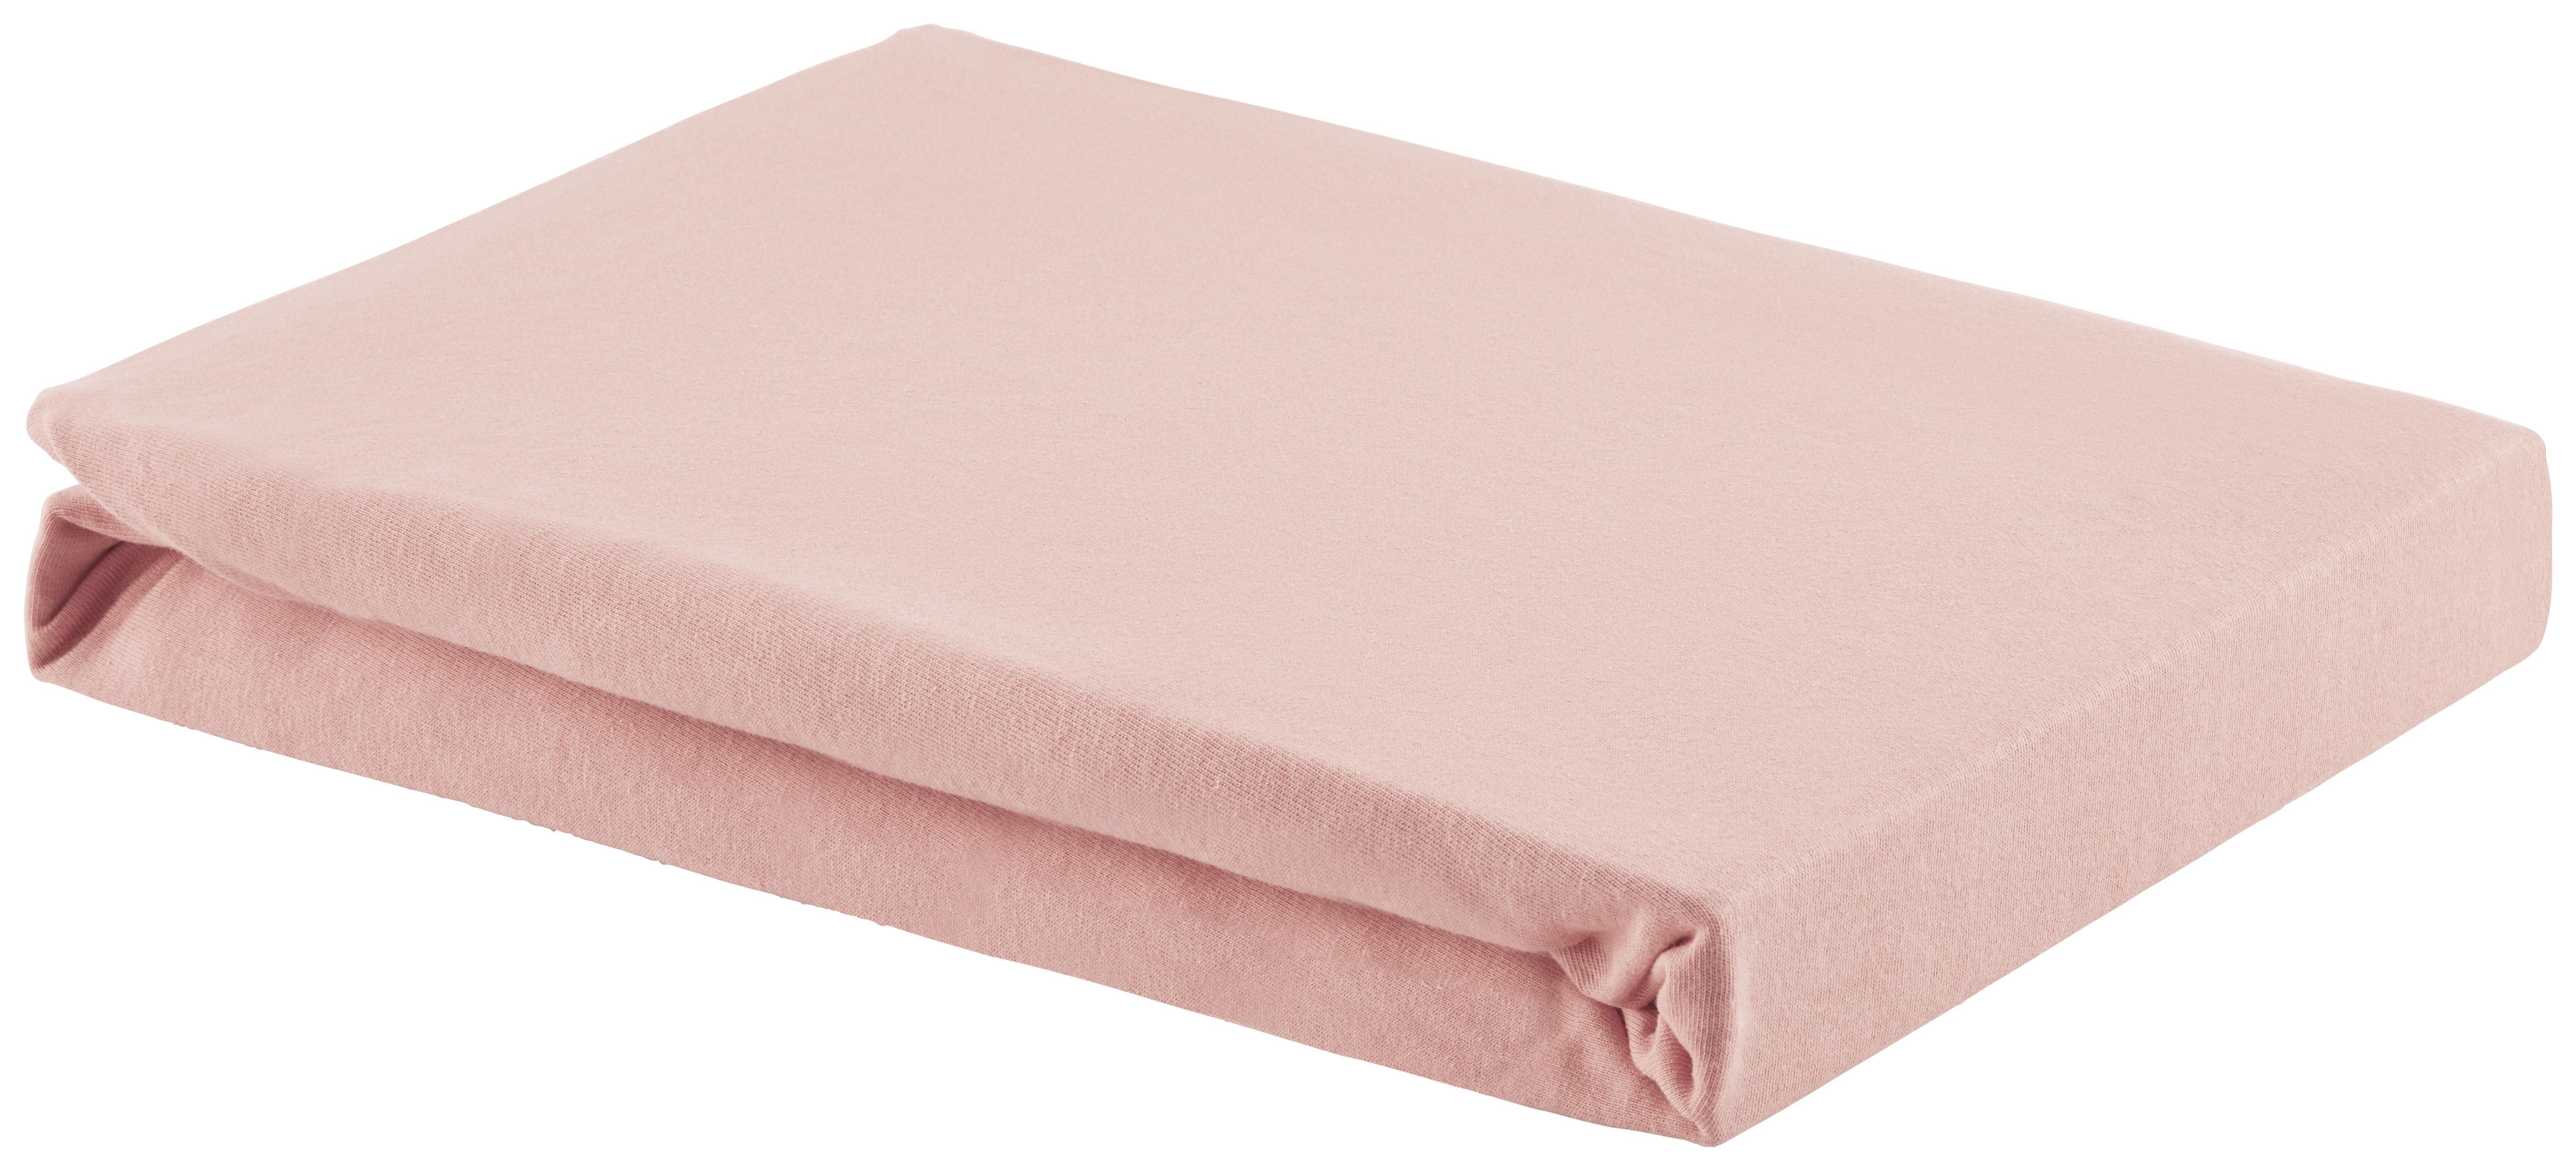 Fixleintuch Basic in Rosa ca. 180x200cm - Rosa, Textil (180/200cm) - Modern Living